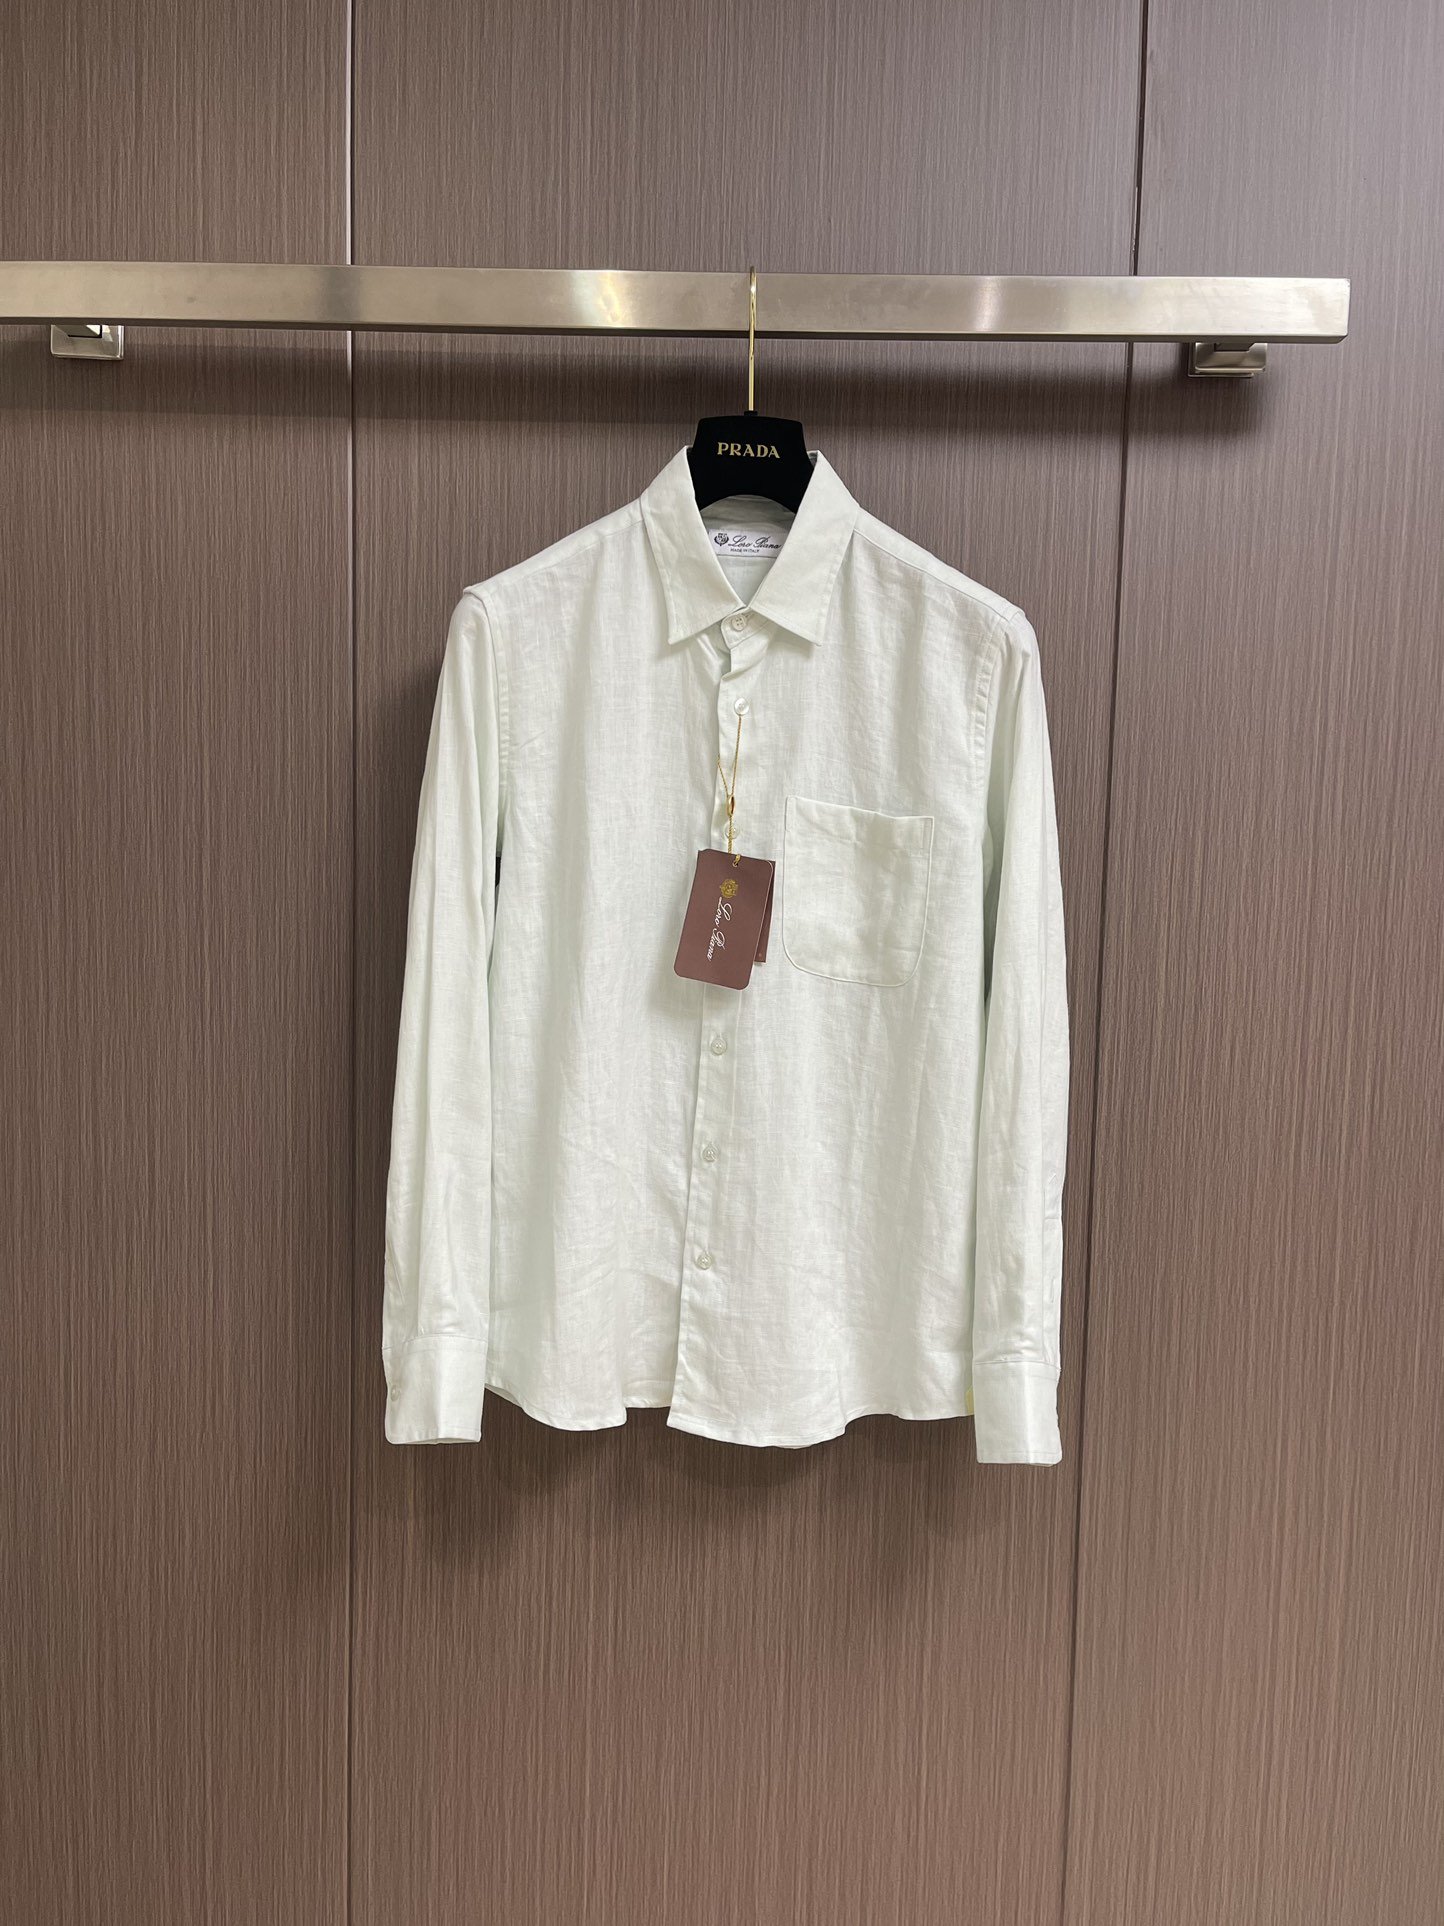 LP 极简剪裁天丝莱赛尔混纺醋酸纤维长袖衬衫，精致工艺、高级质感、经典单品，这些都是意式穿搭的关键词，也是LP骨子里的\